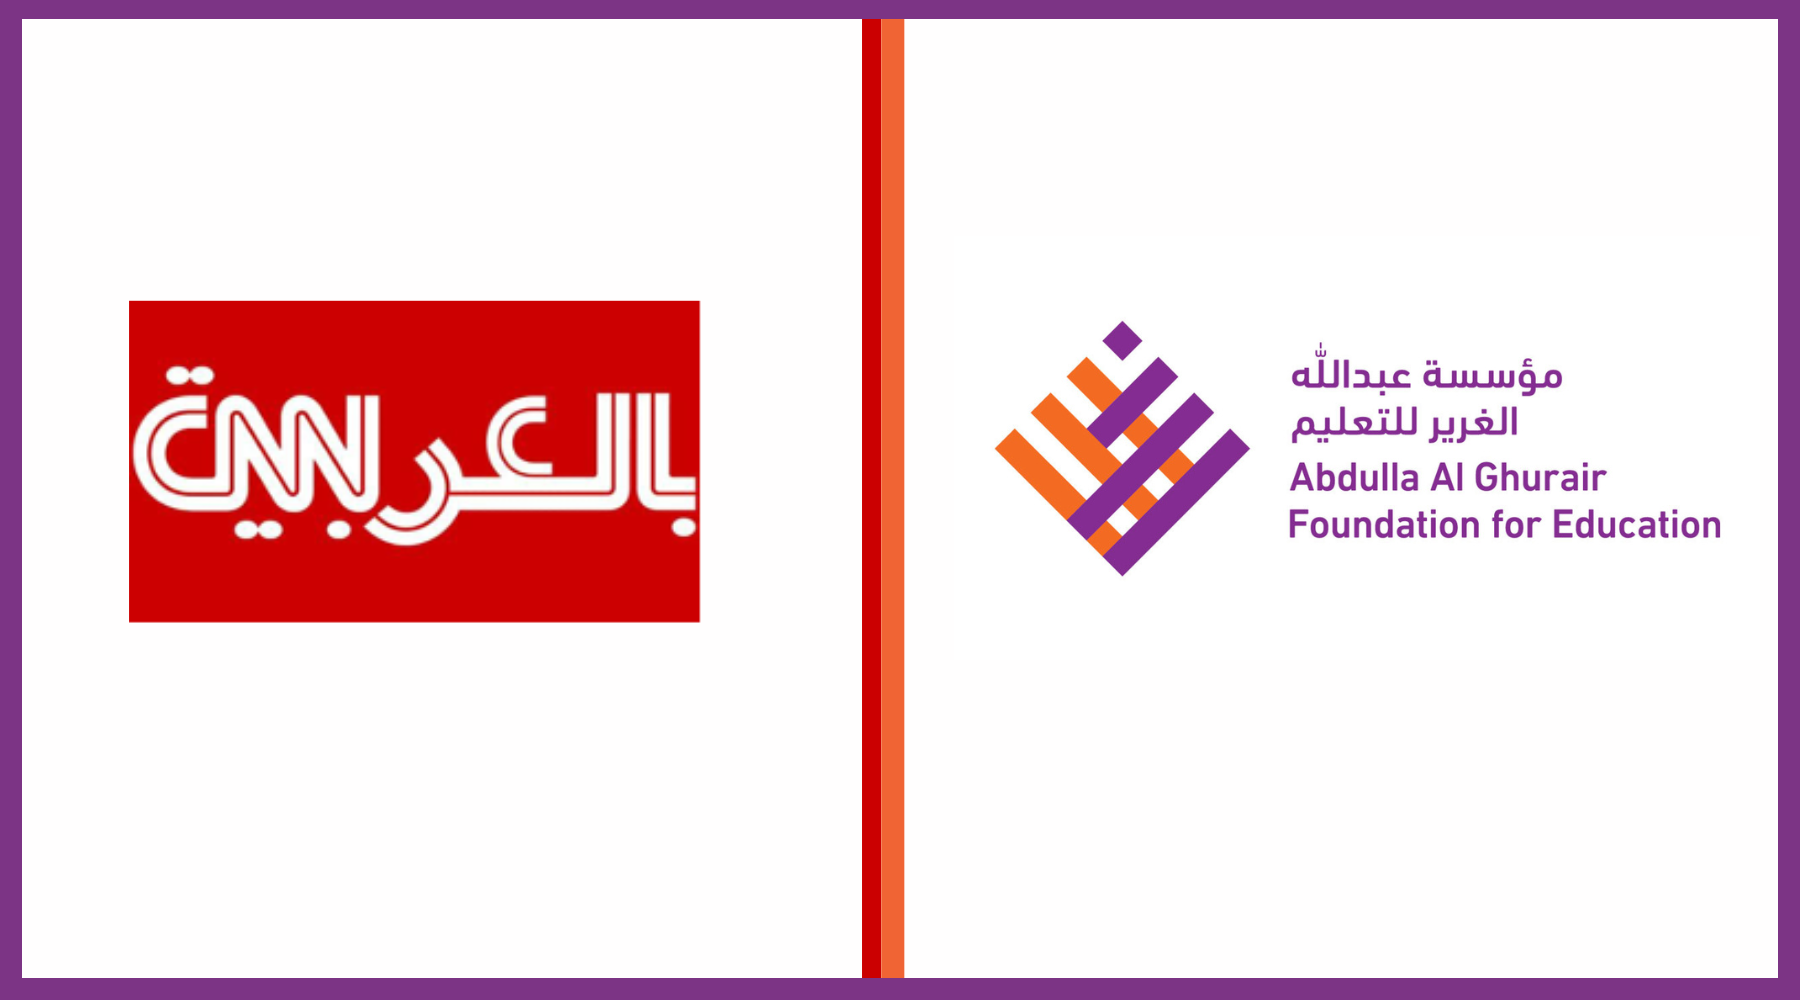 CNN Arabic Partners with The Abdulla Al Ghurair Foundation for Education for Arab Youth Development